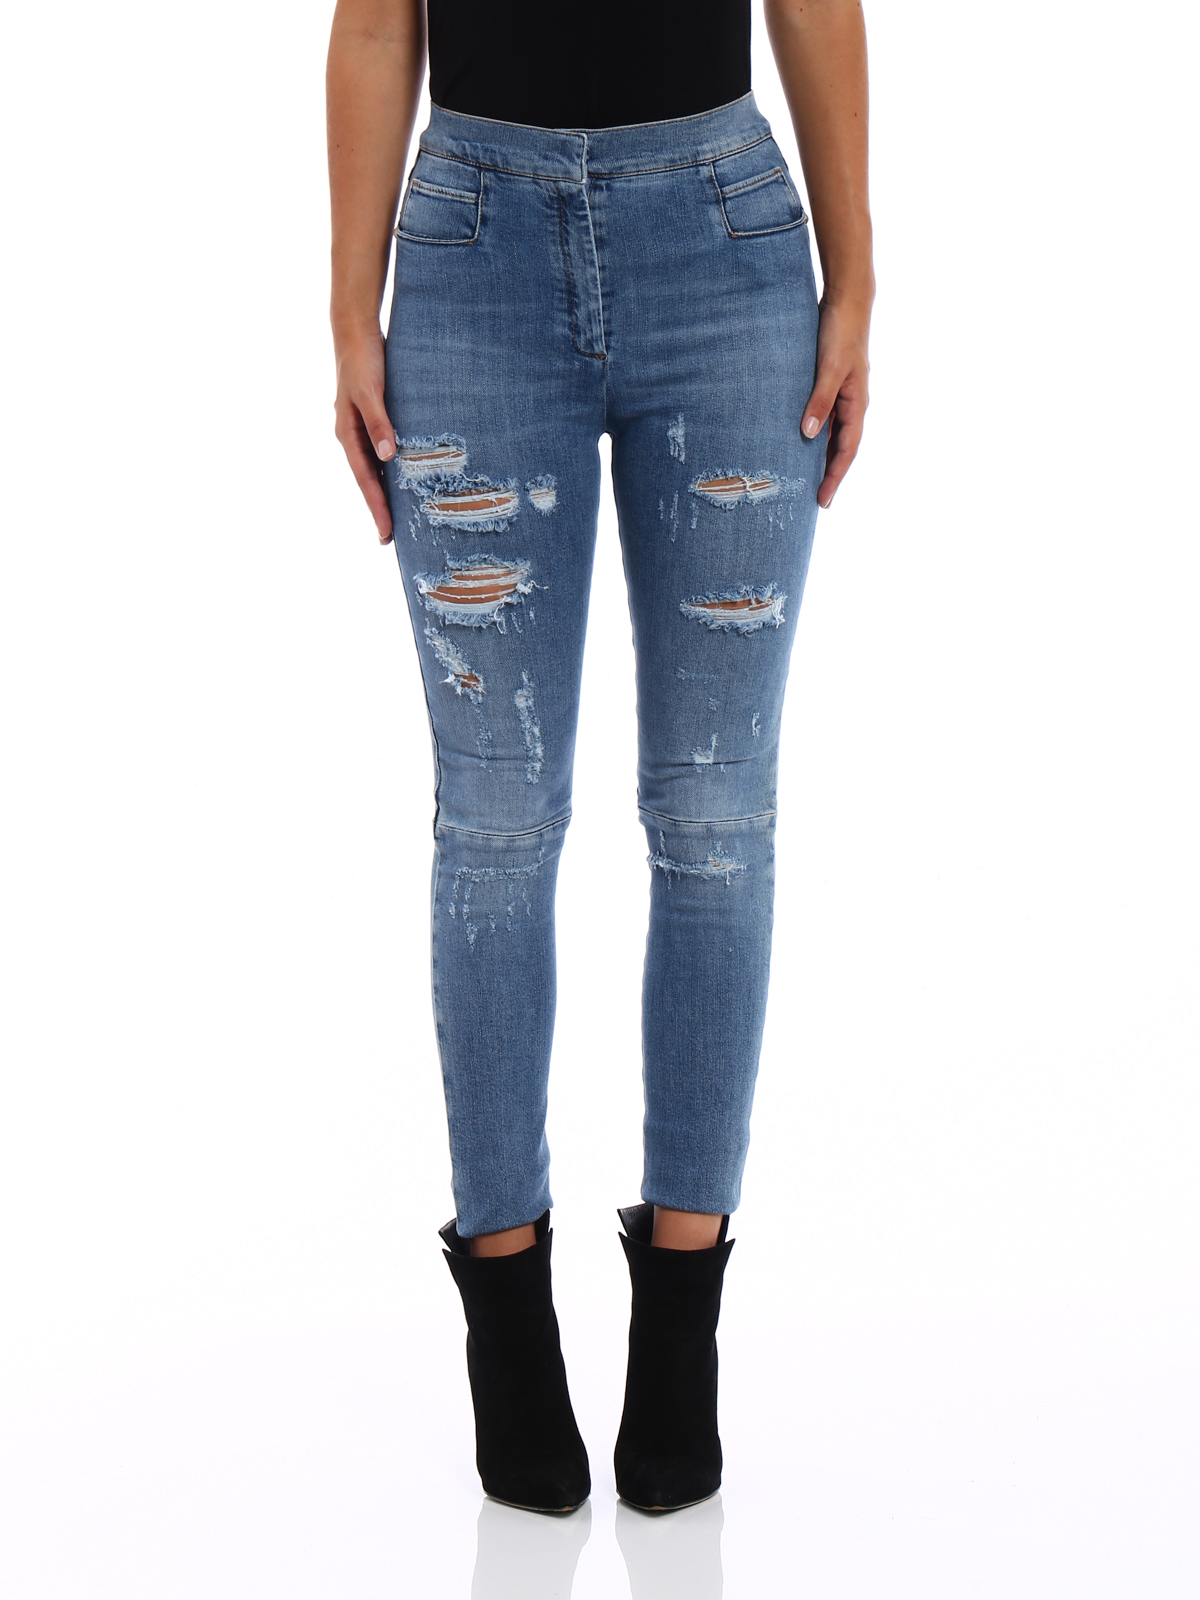 Grunde Tegnsætning ankomme Skinny jeans Balmain - Ripped high waisted skinny jeans - 115421133KC3140